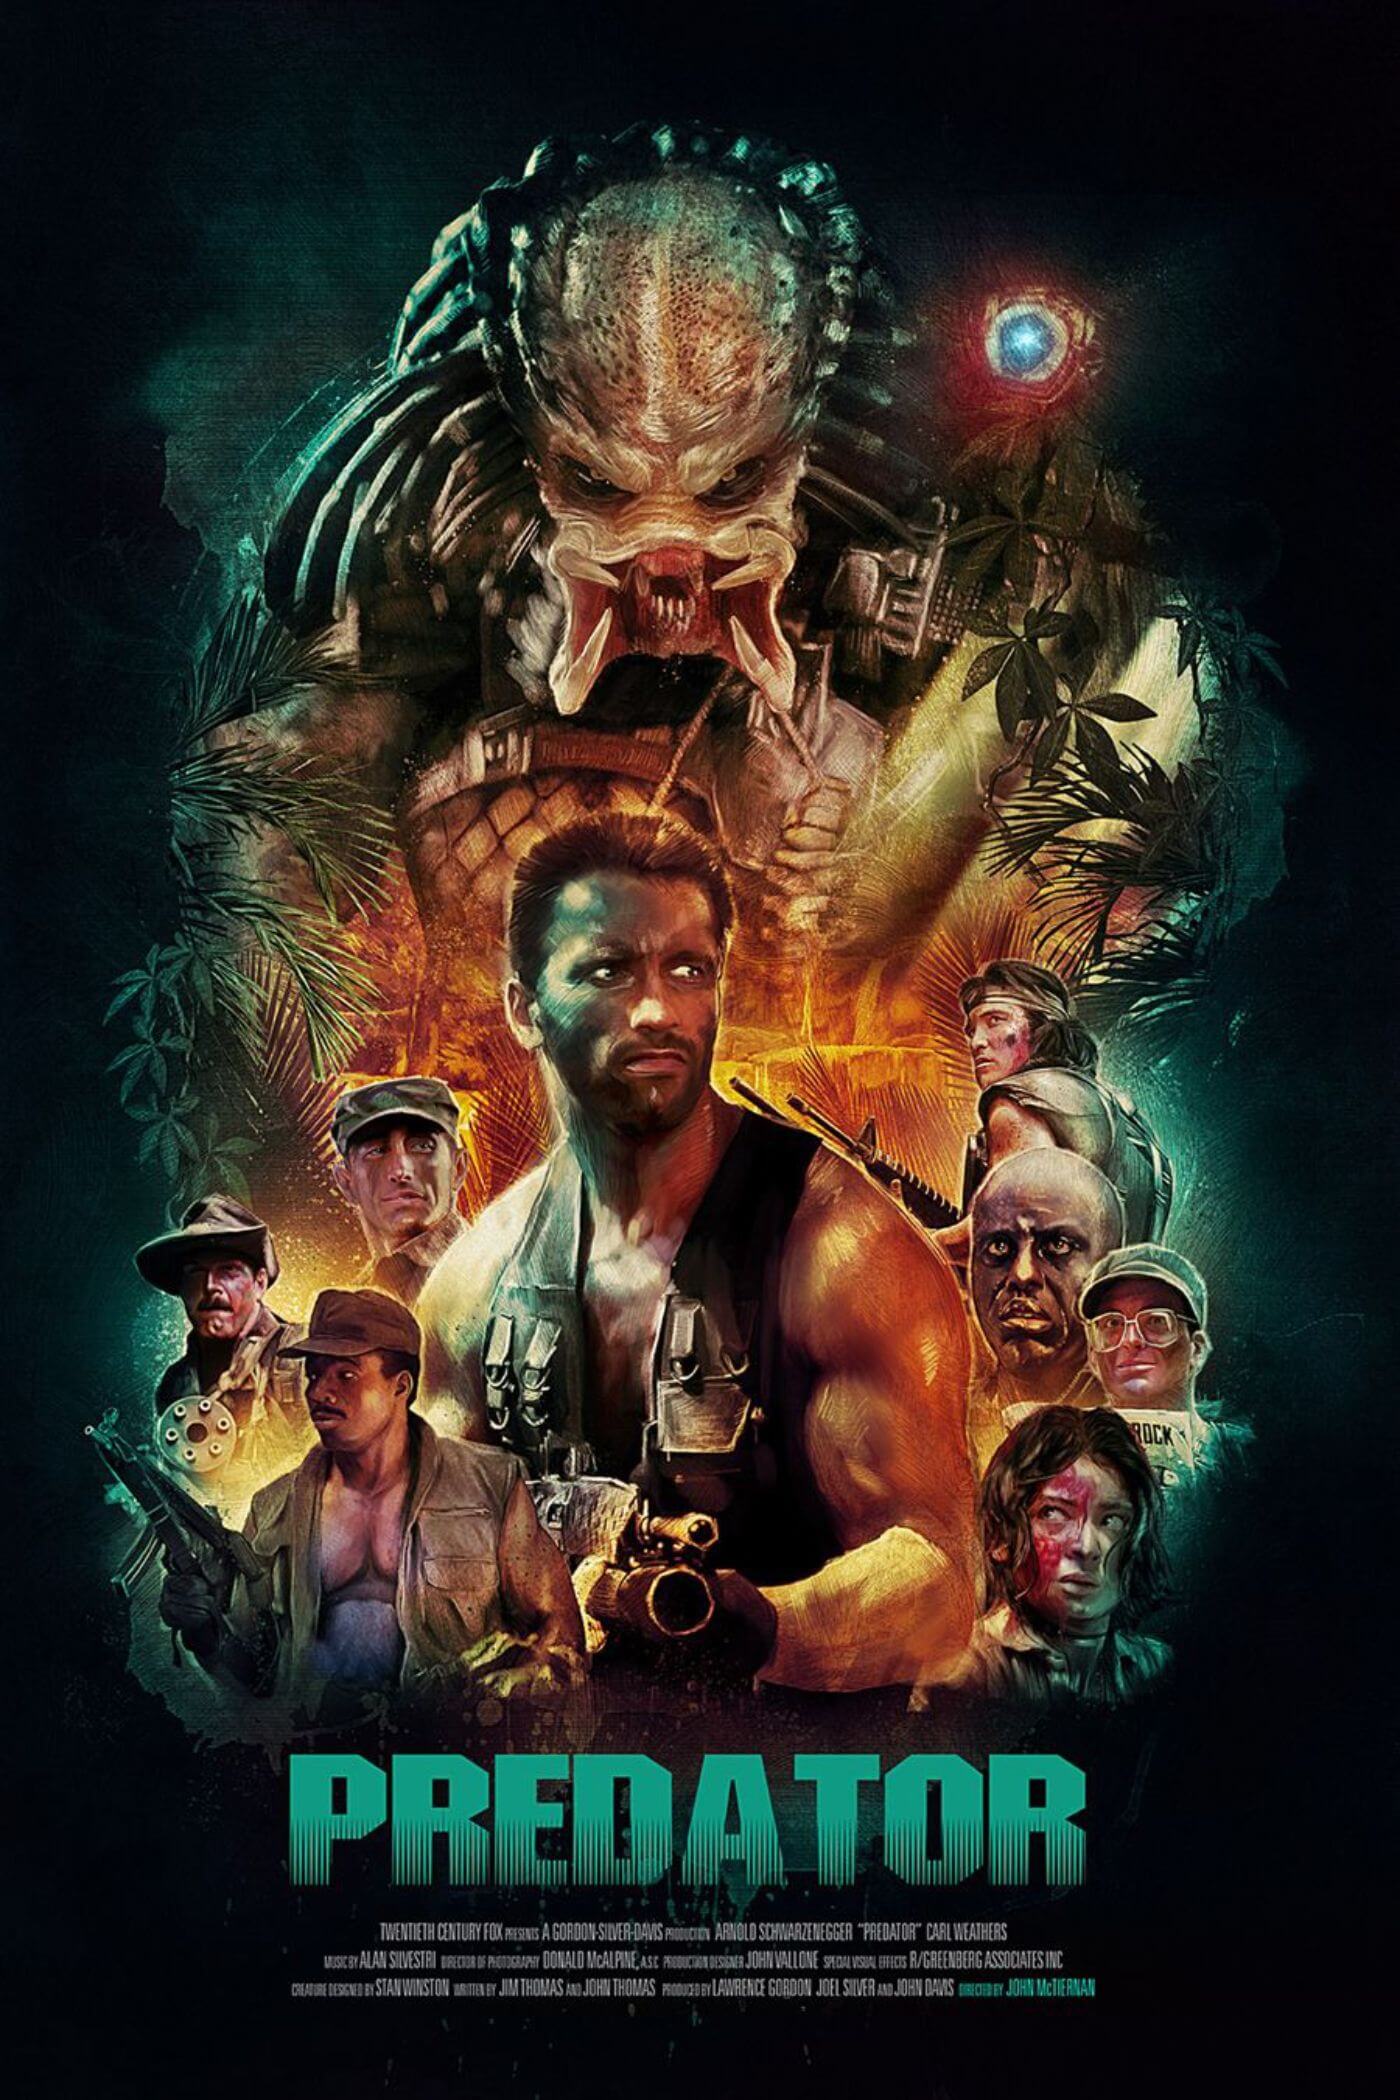 Original Predator Movie Poster - Action - Arnold Schwarzenegger - Sci Fi